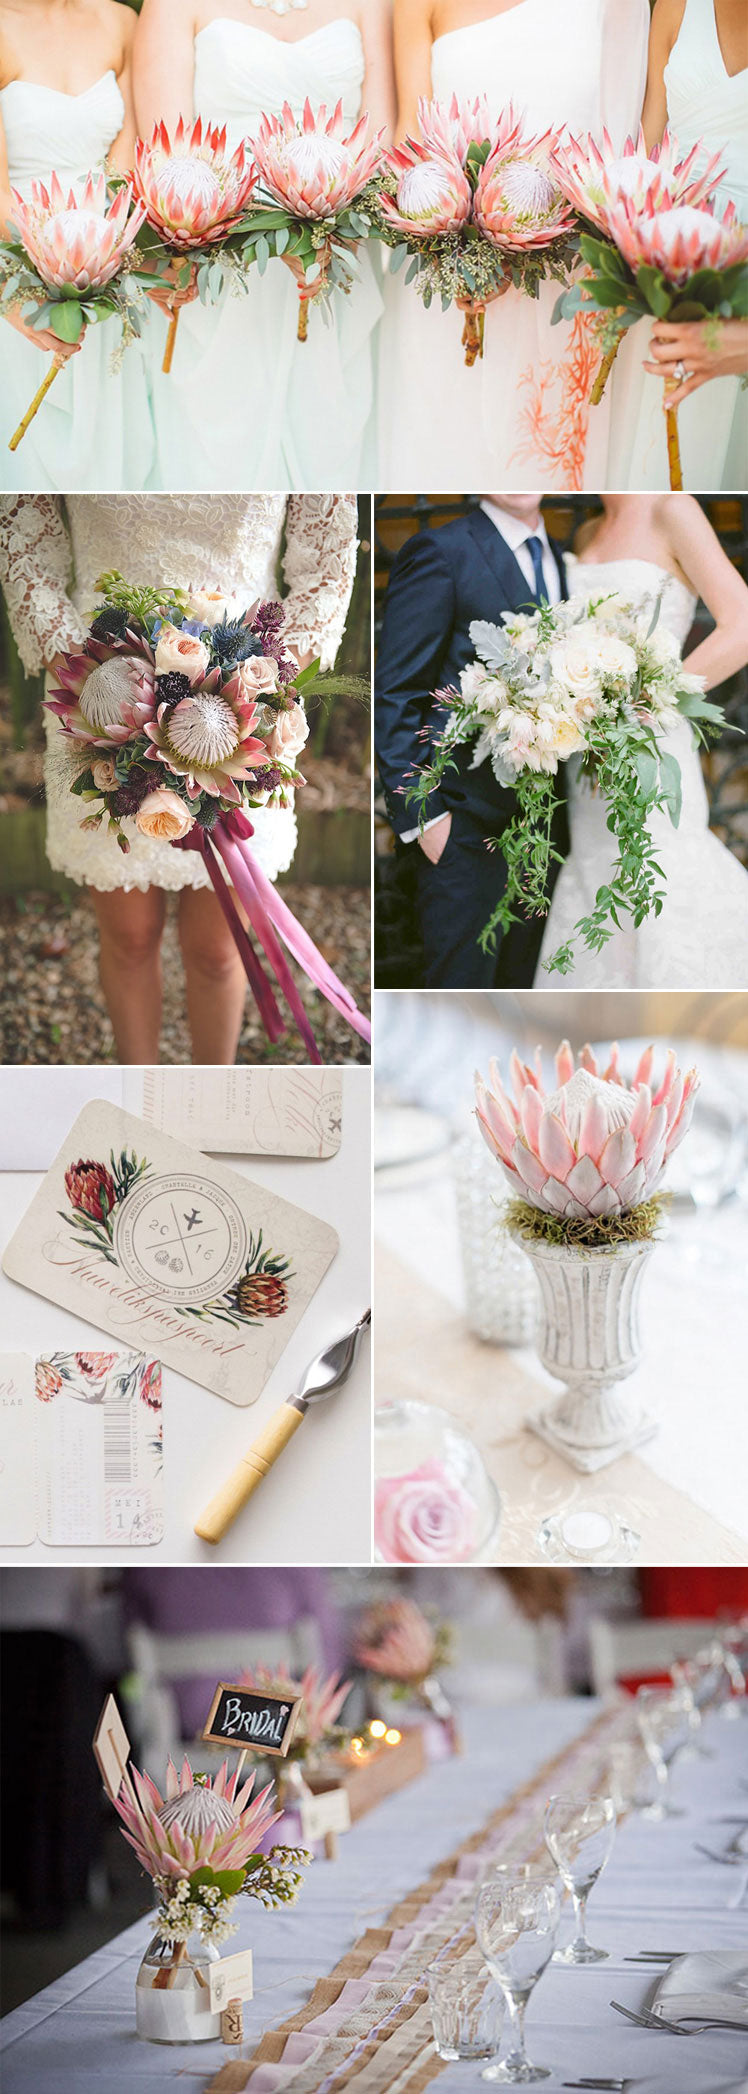 Protea wedding flower ideas